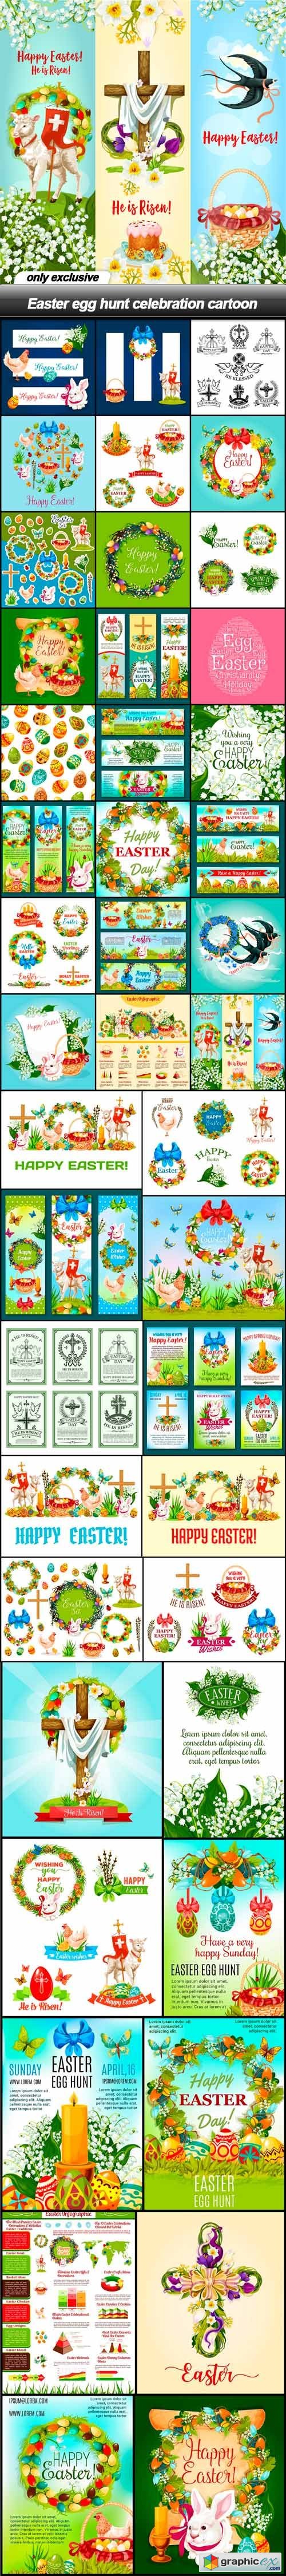 Easter egg hunt celebration cartoon - 45 EPS